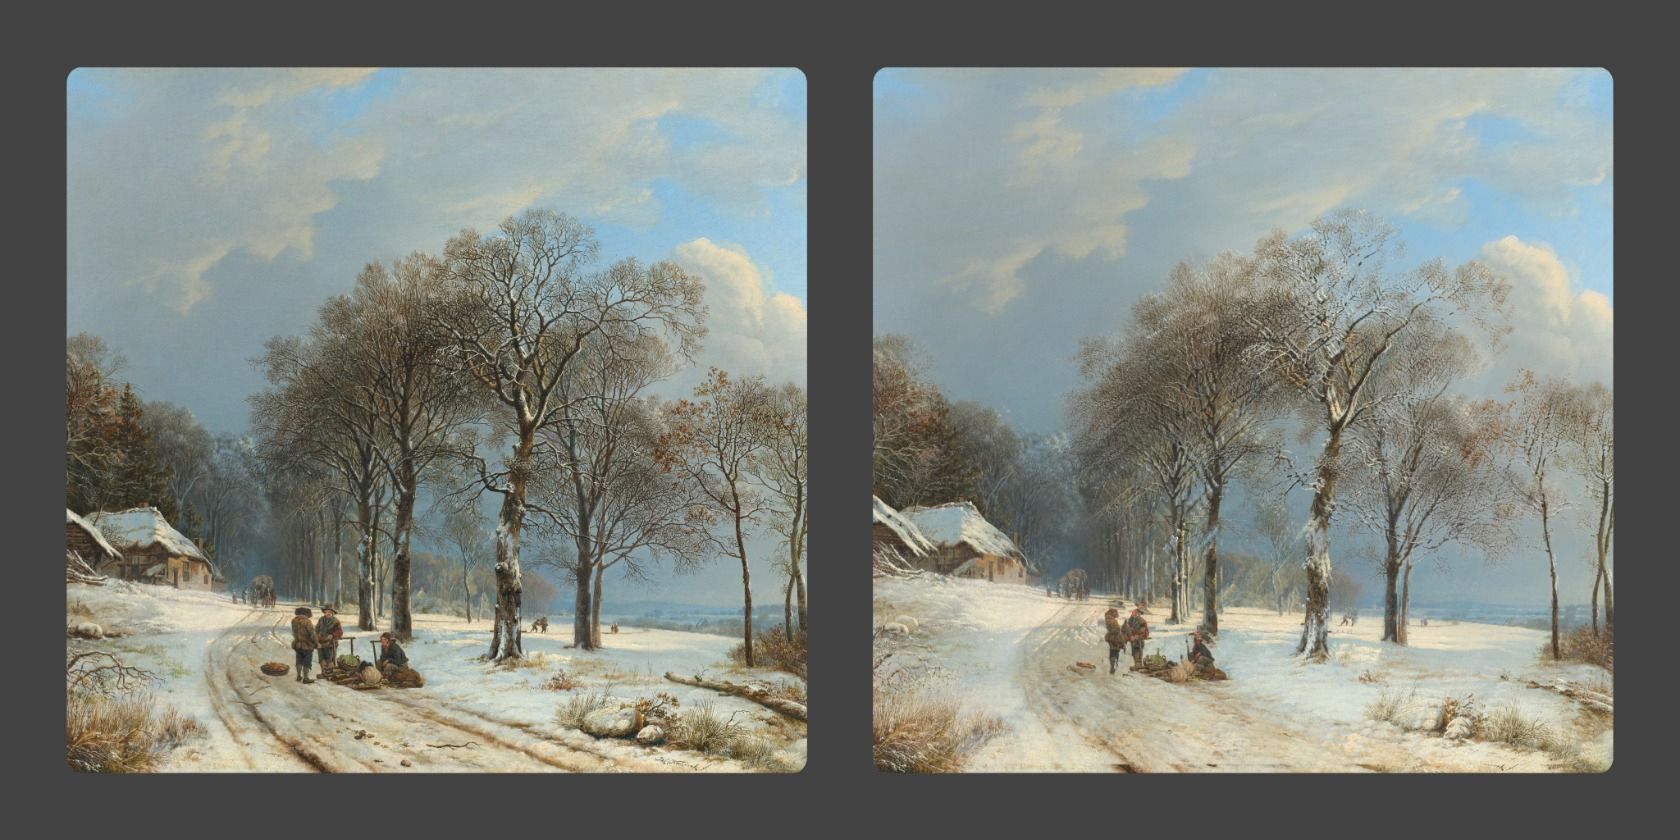 Artwork of snowy, winter landscape in rural countryside 